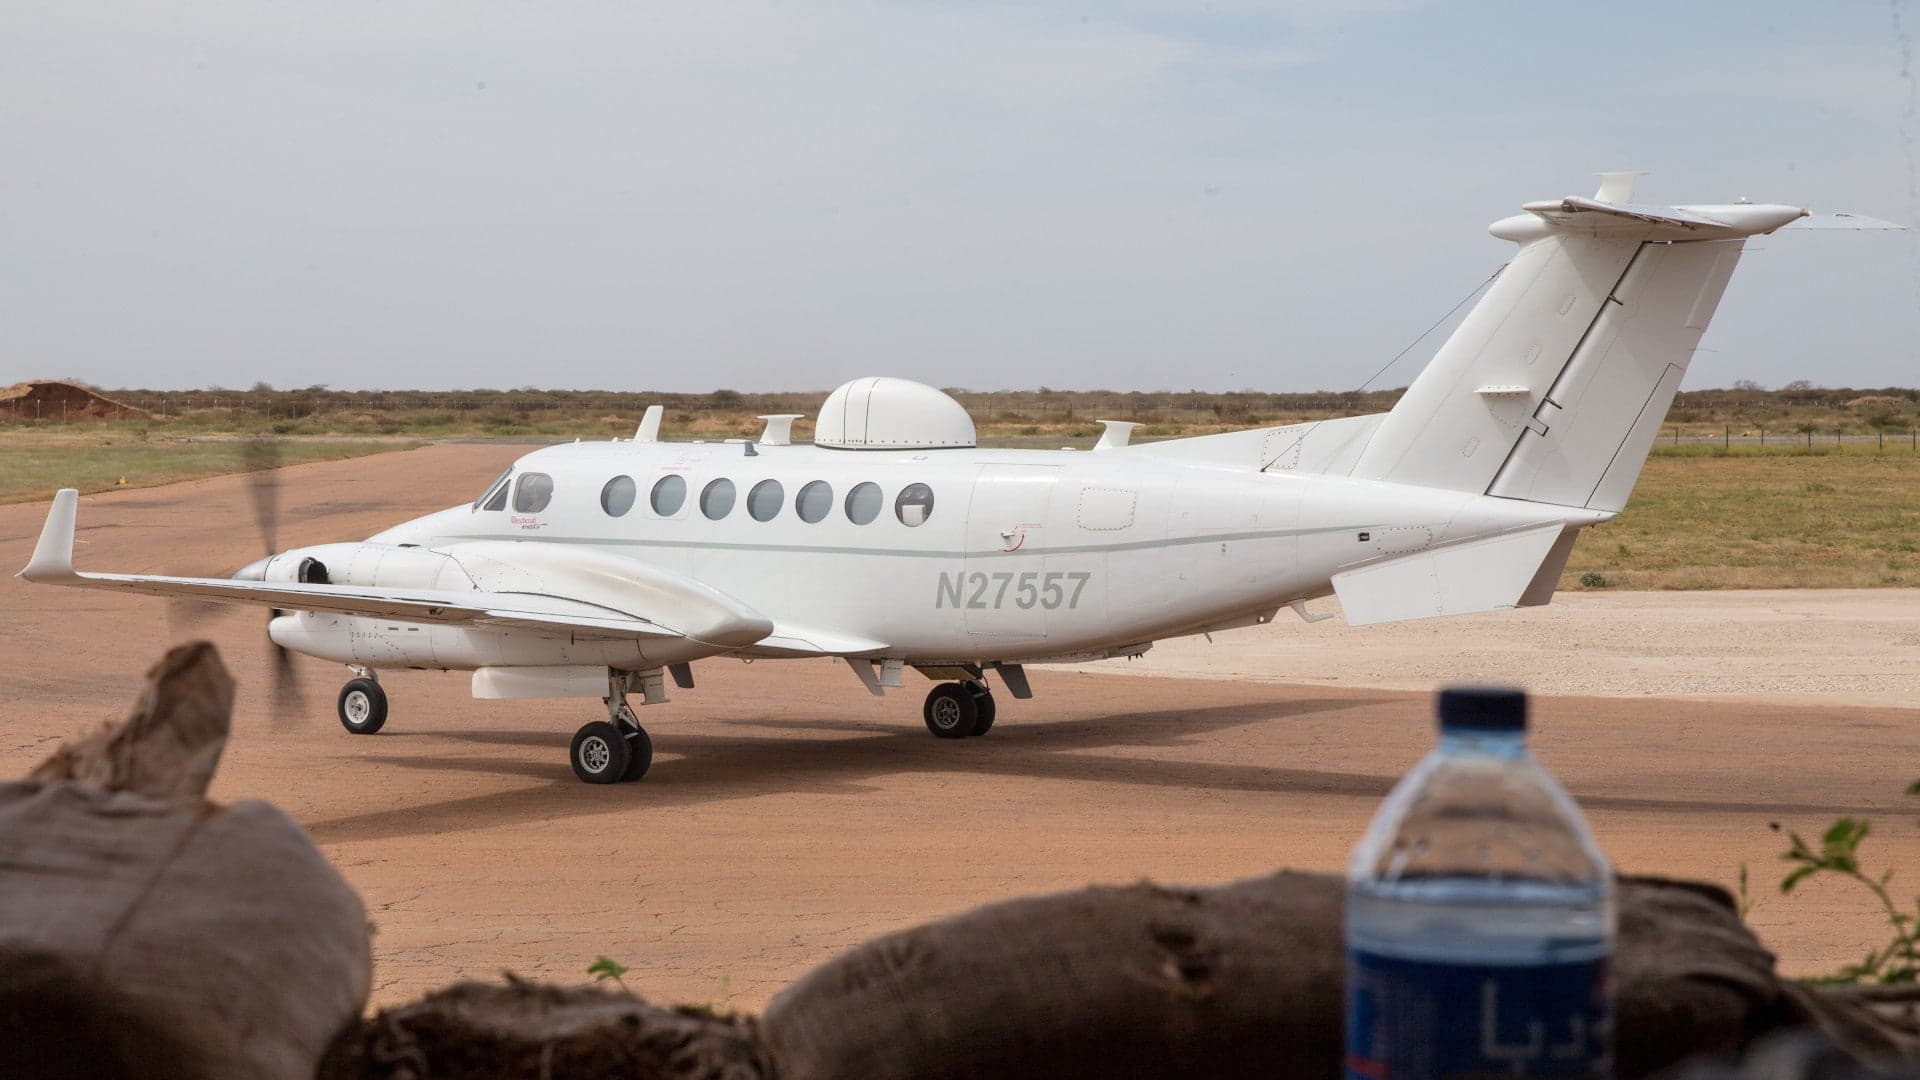 Photo Emerges Of Shadowy Intelligence Gathering “Ghost Plane” In Somalia